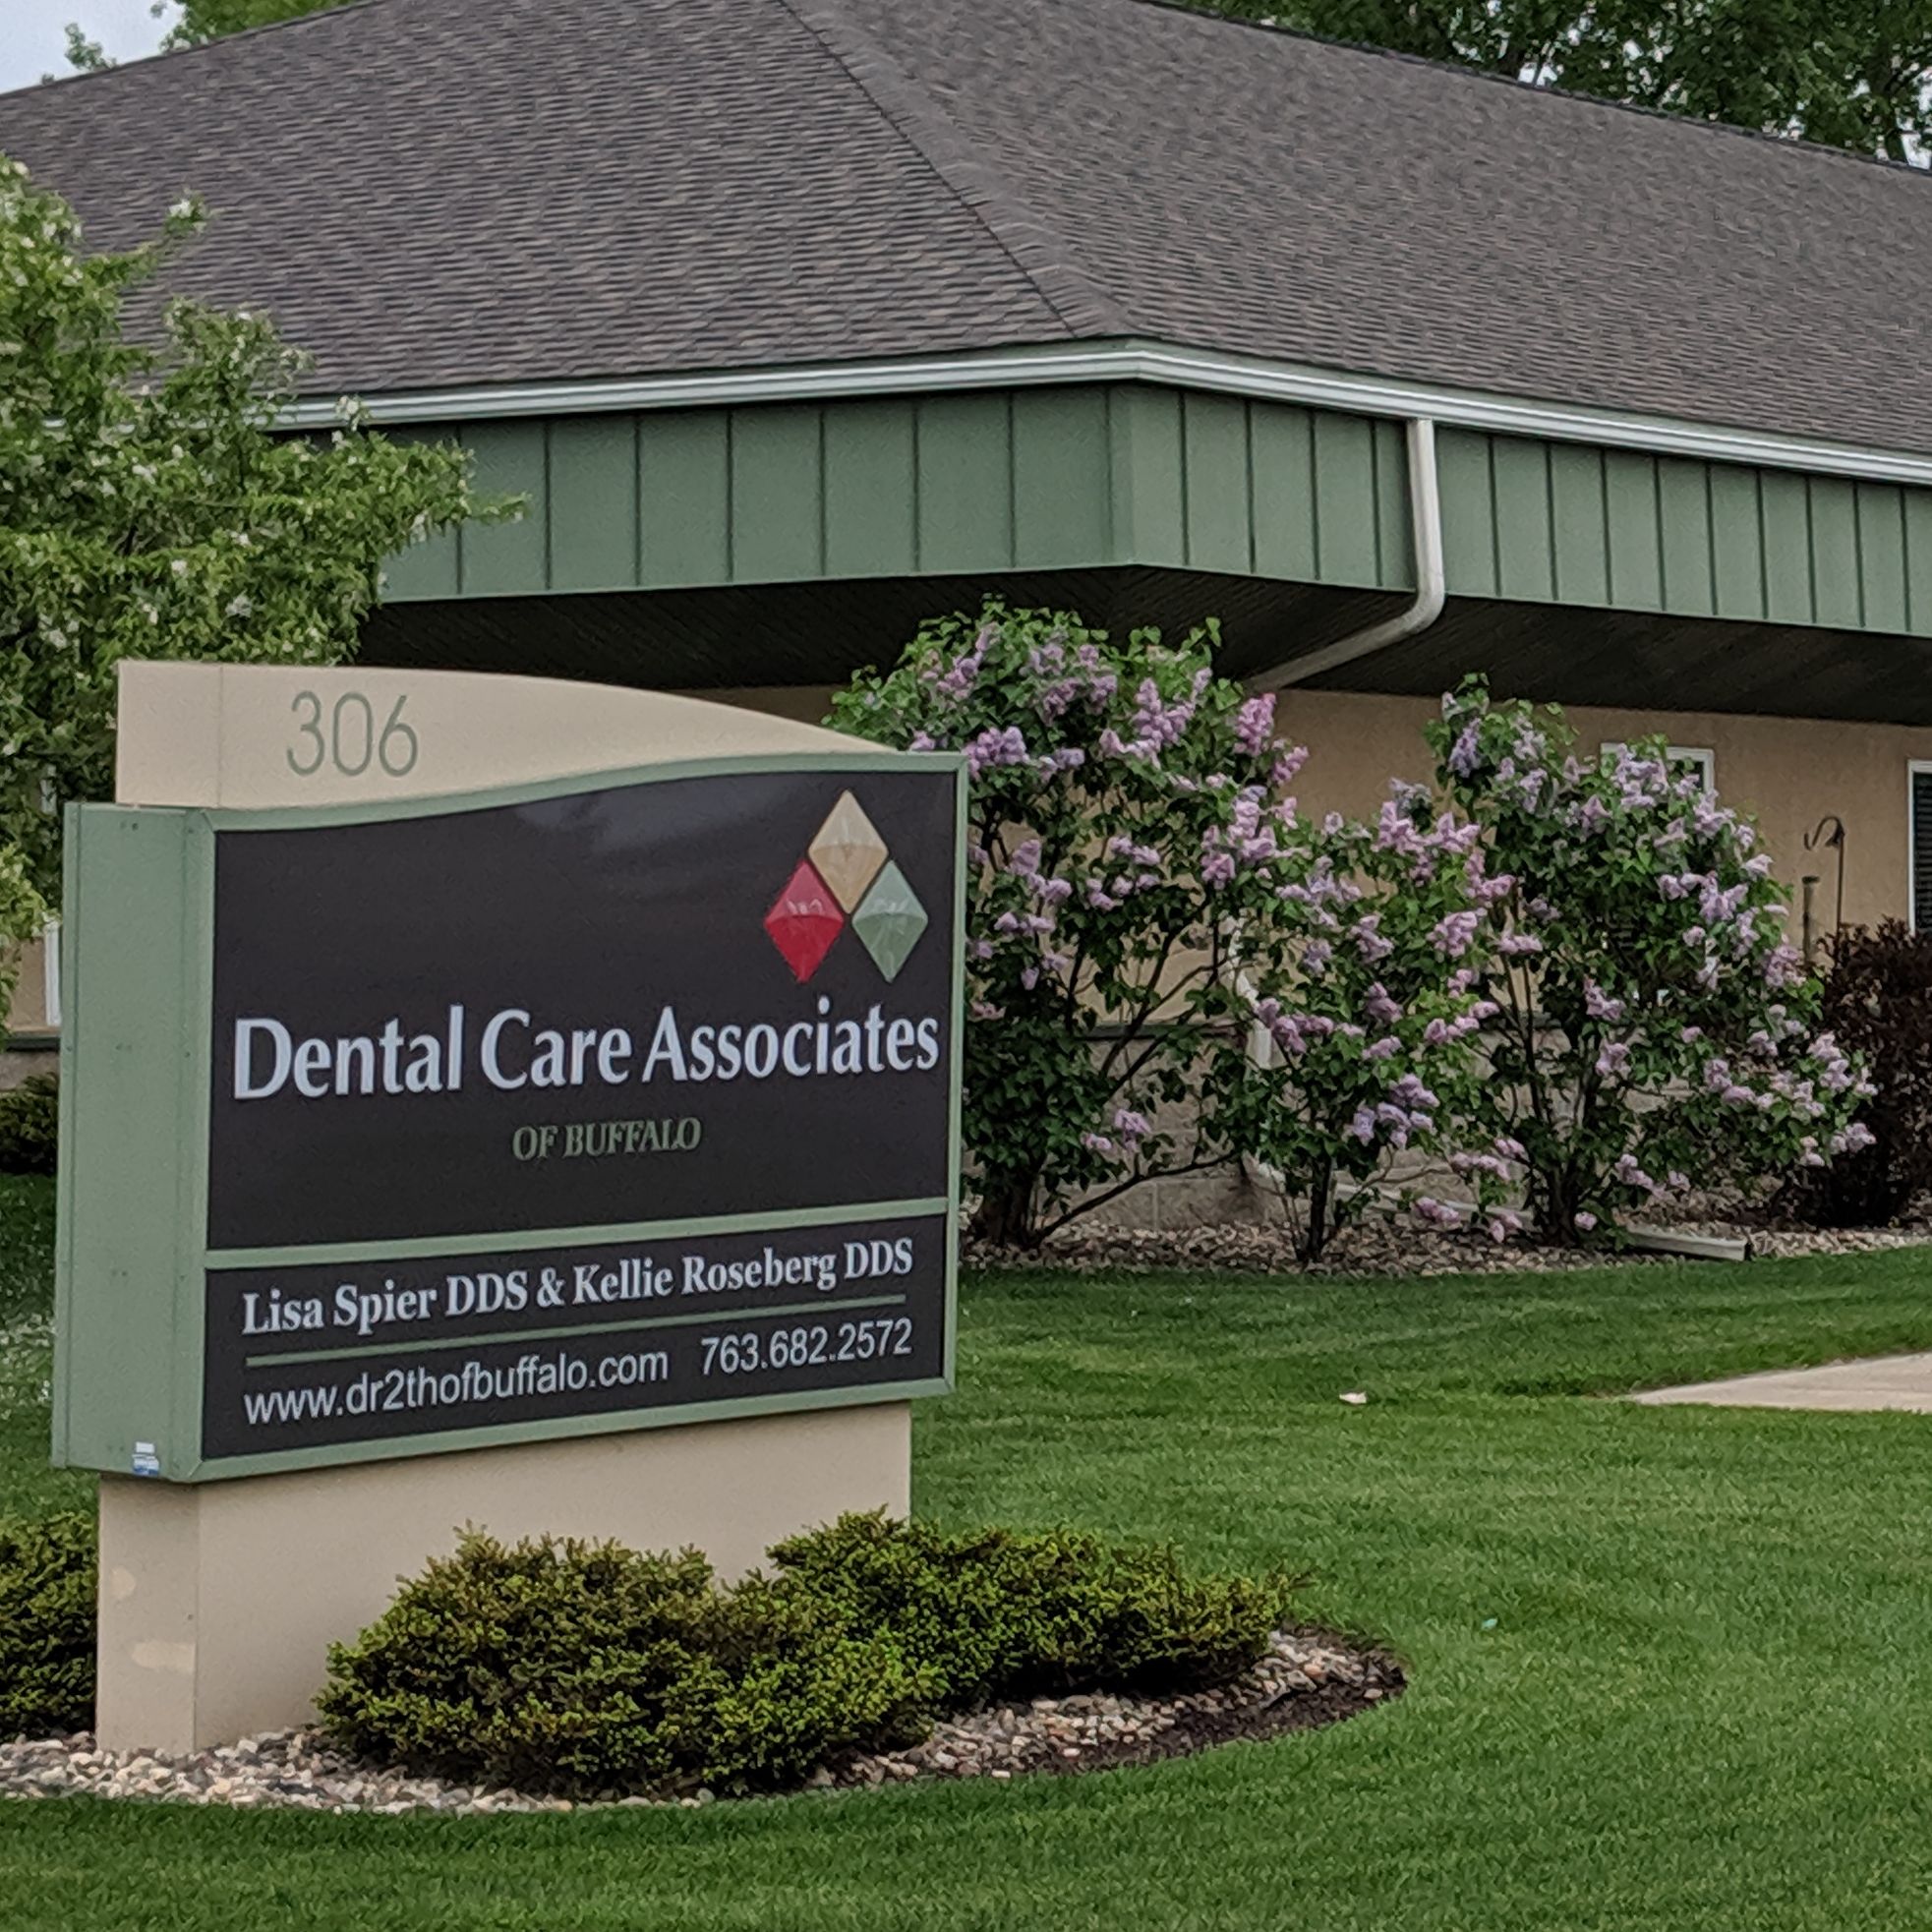 Dental Care Associates of Buffalo Photo